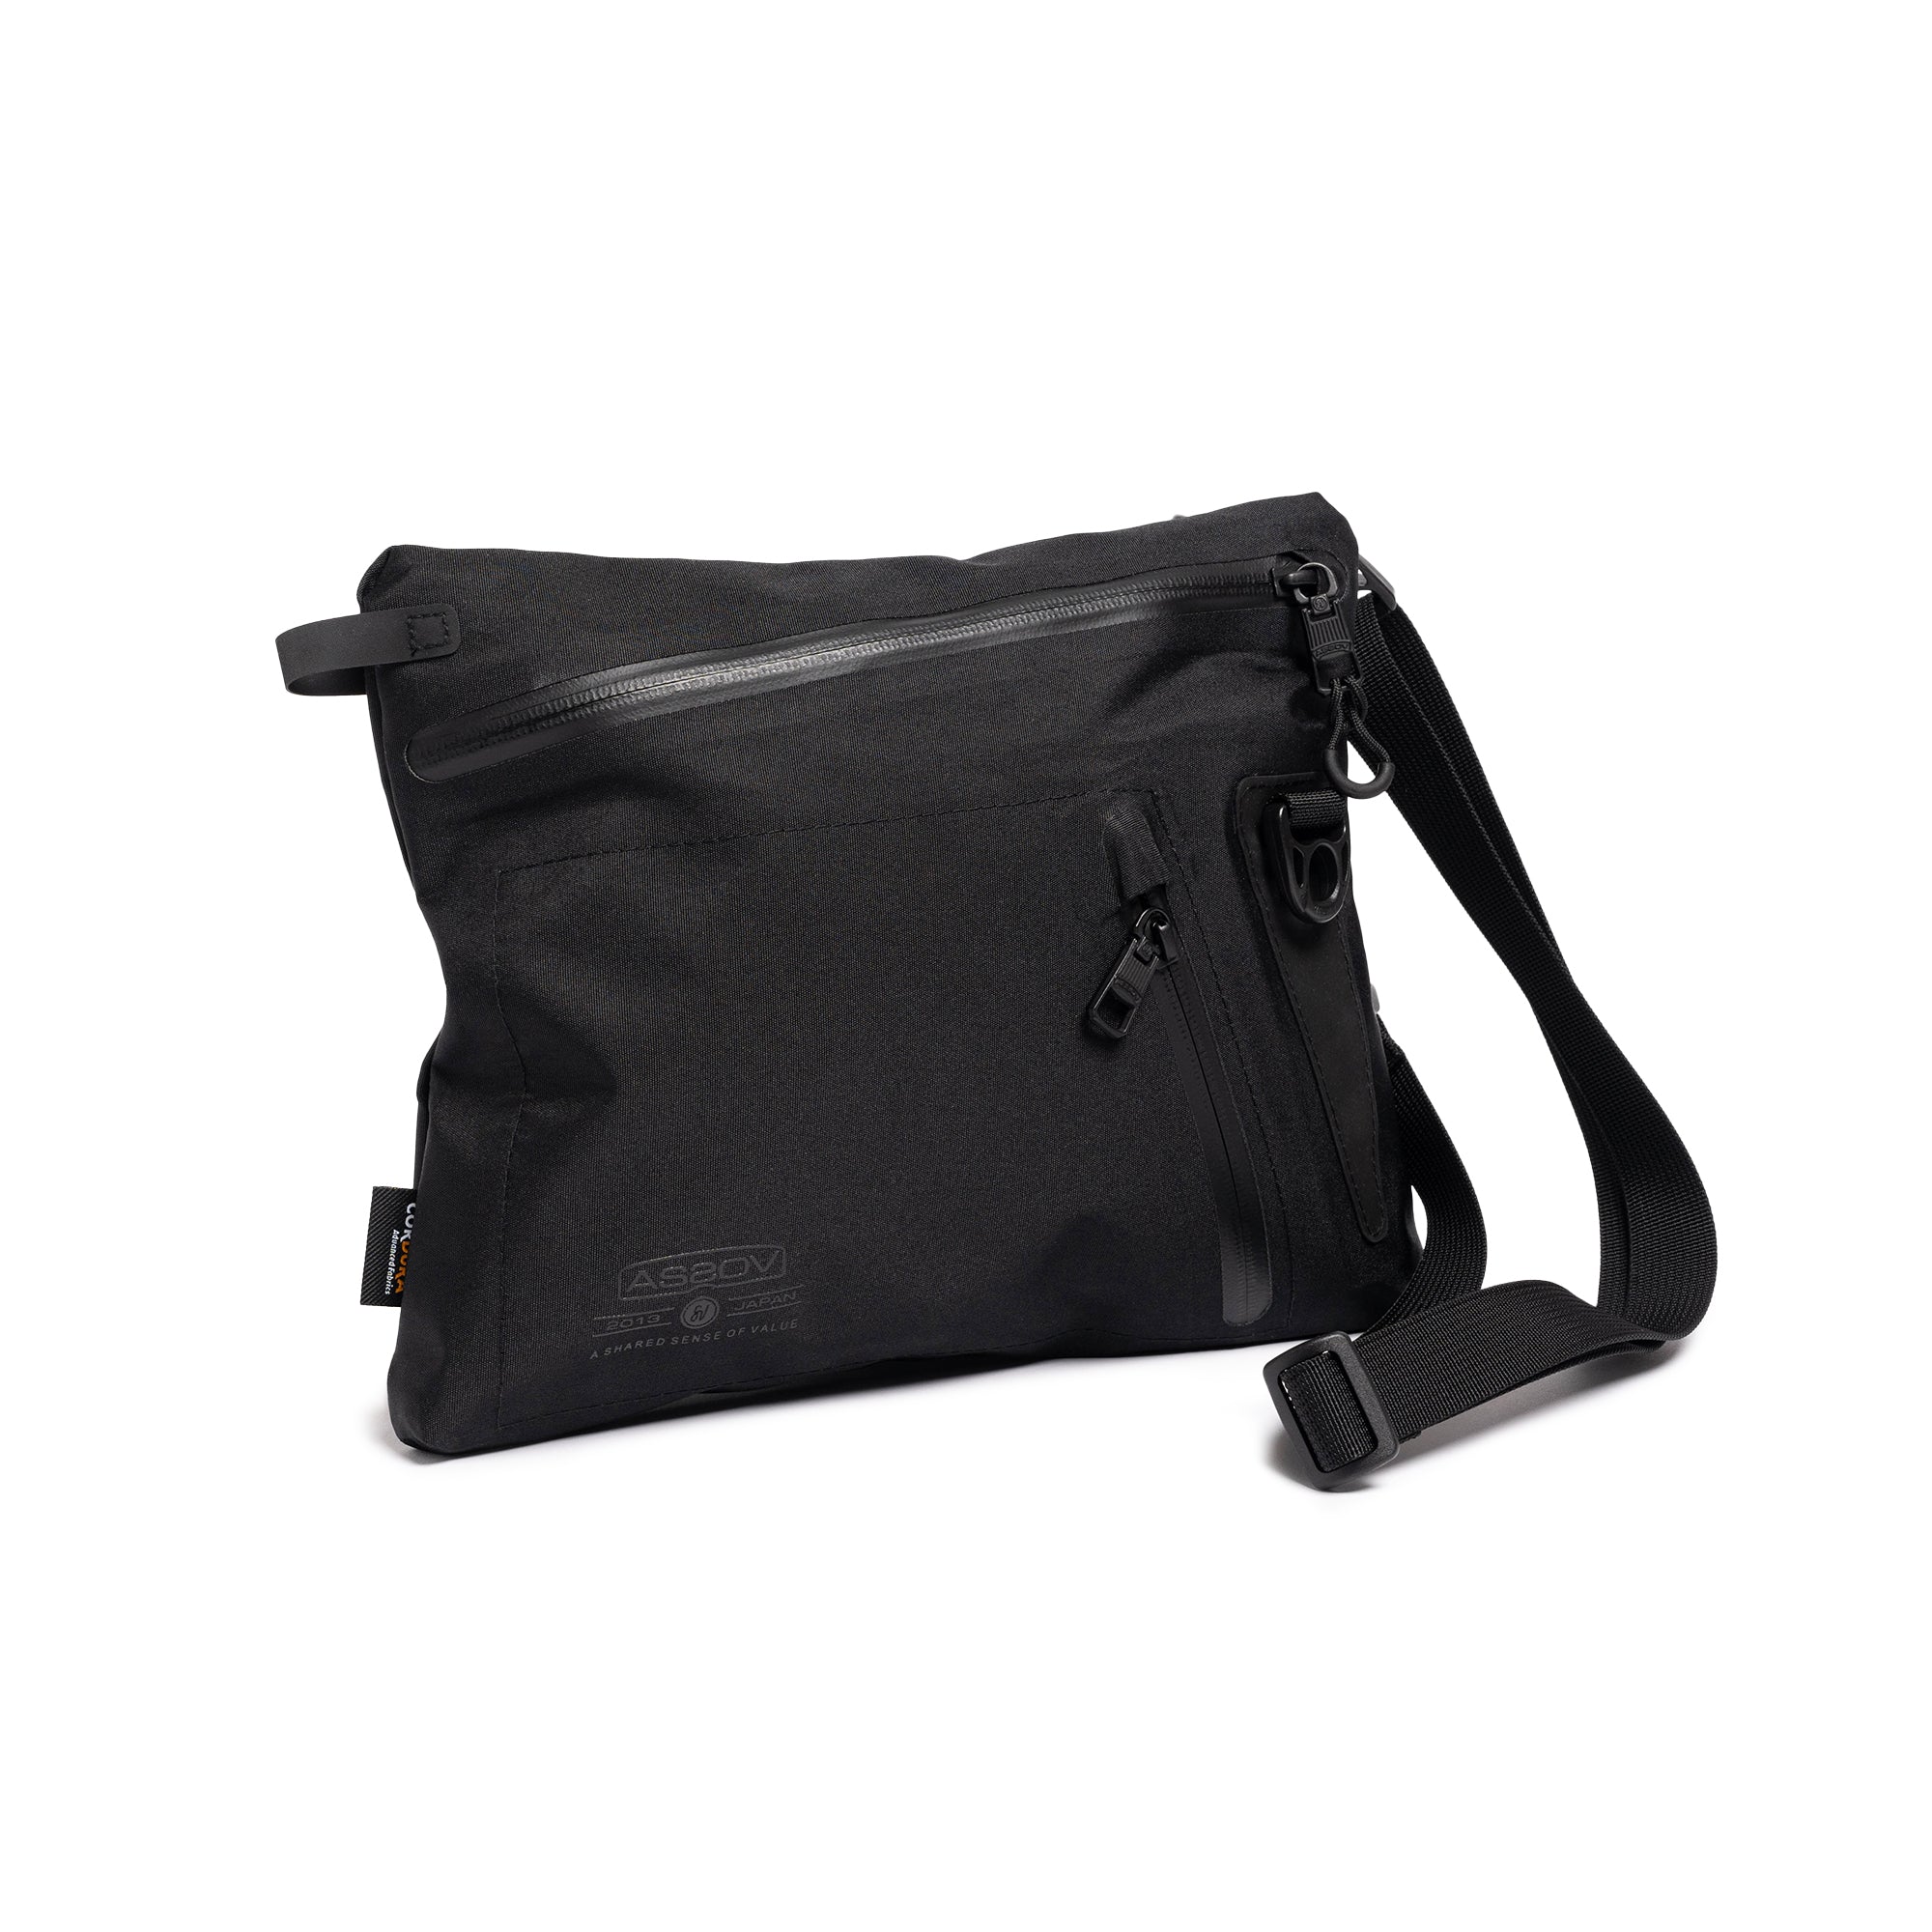 The Attico 7 7 leather shoulder bag